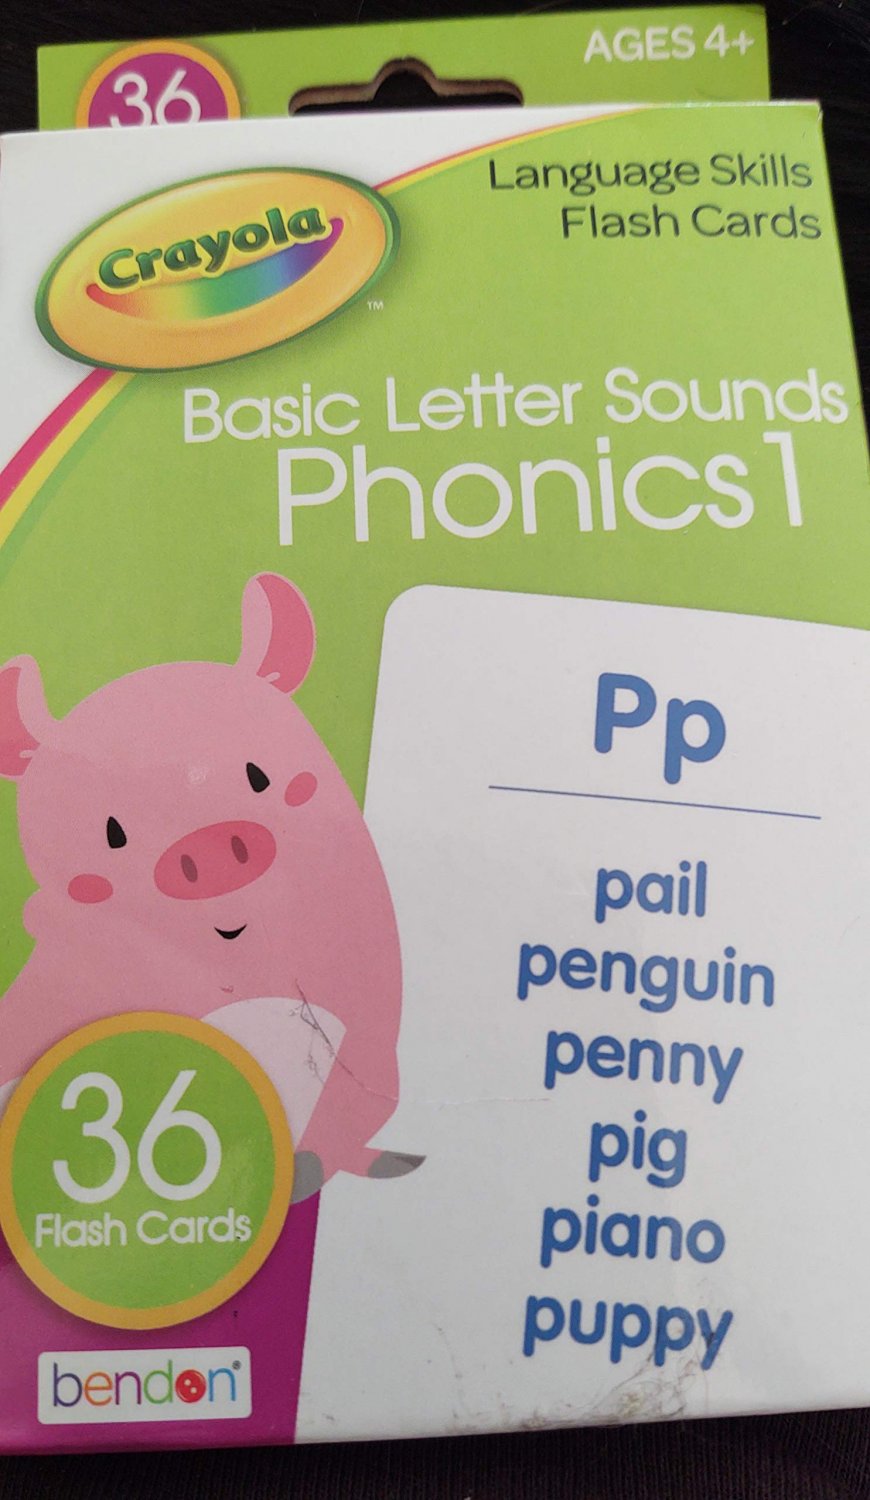 Crayola Basic Letter Sounds Phonics Flash Cards